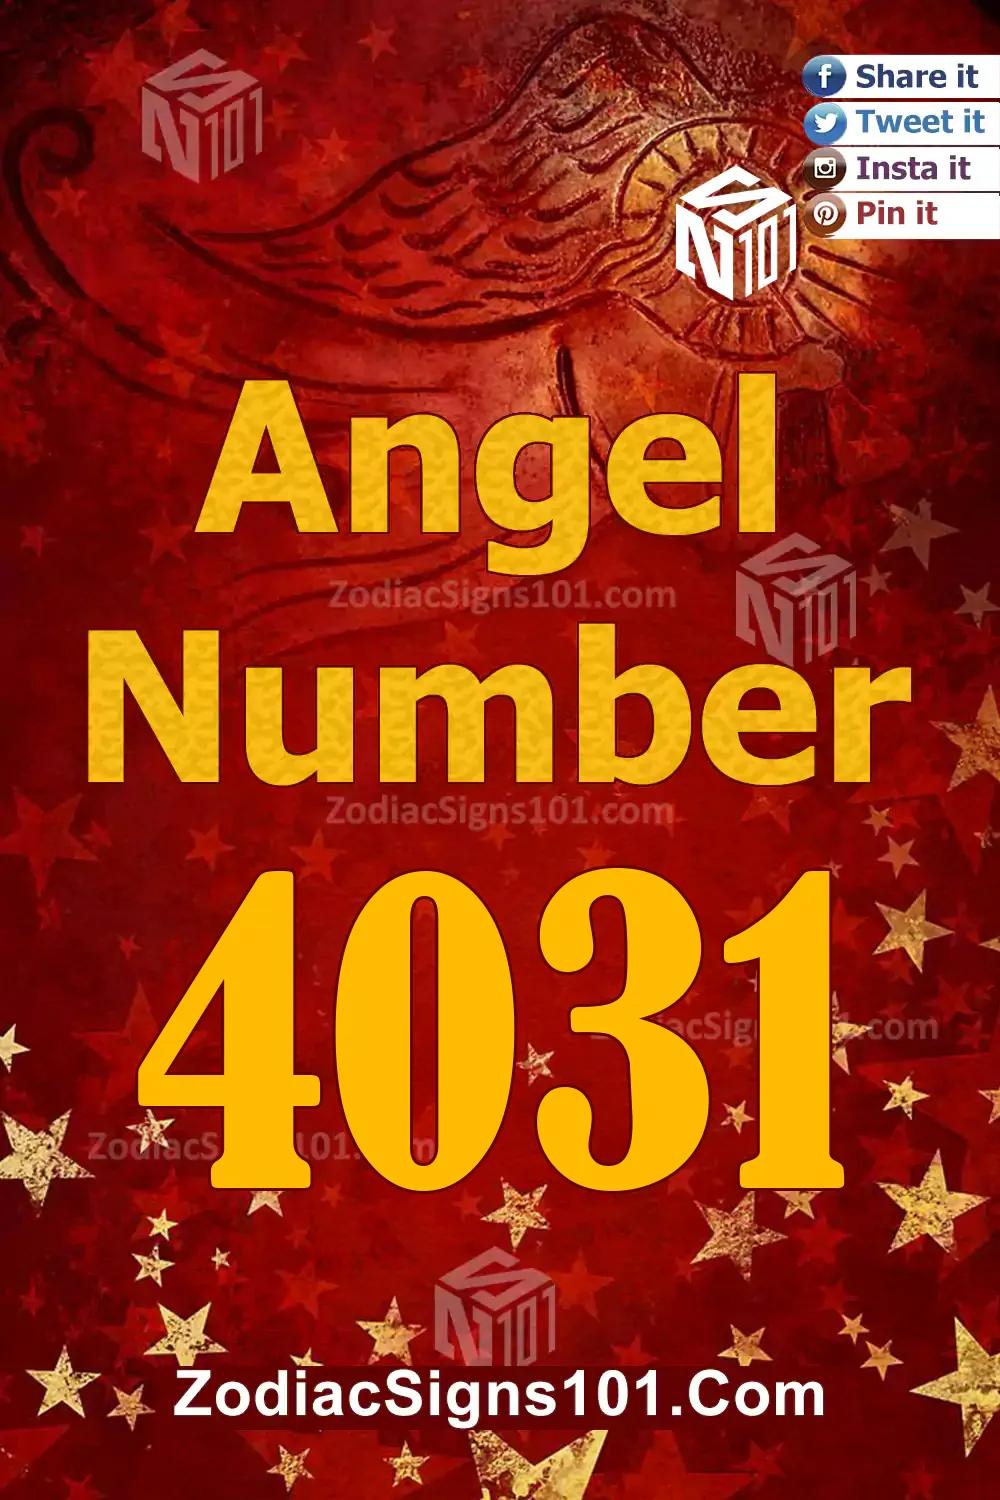 4031-Angel-Number-Meaning.jpg